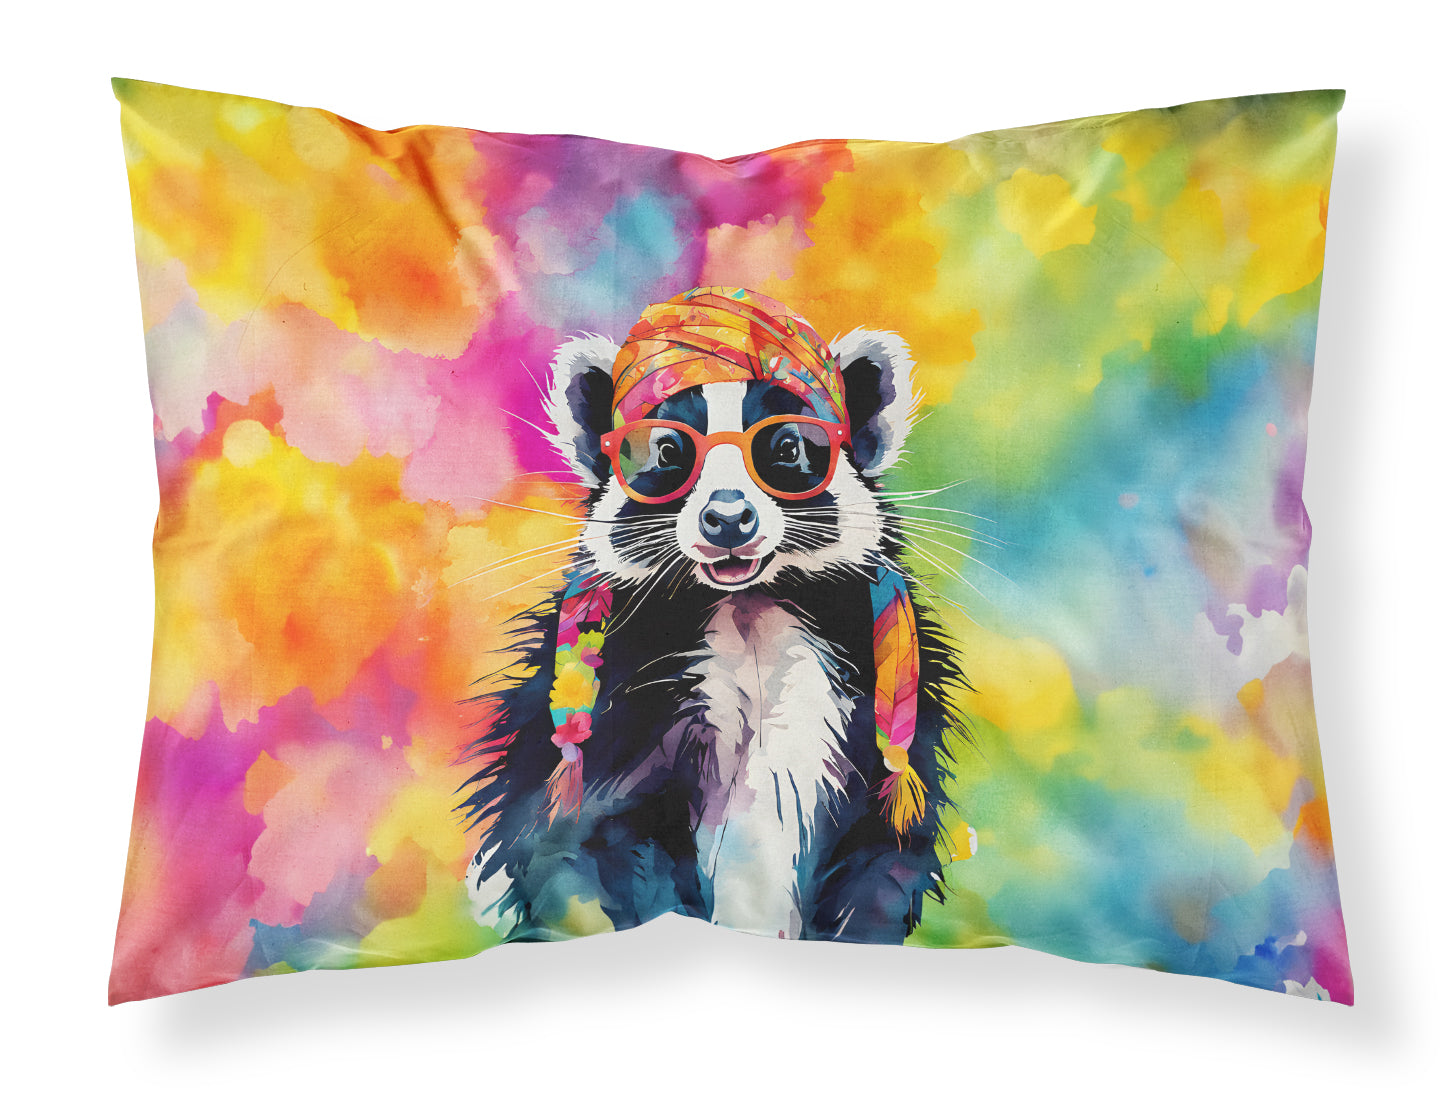 Buy this Hippie Animal Skunk Standard Pillowcase